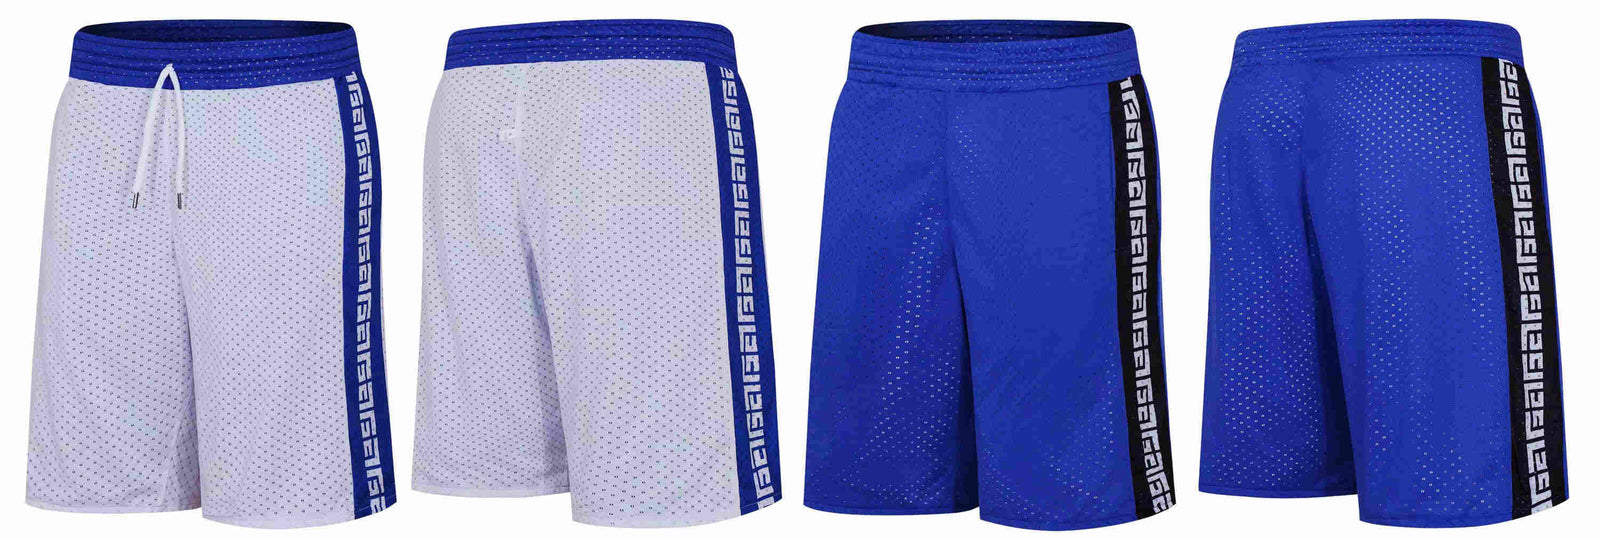 Men Summer Basketball Shorts Male Sportswear Double sided Running Shorts Breathable Training Wear Plus Size Shorts L-5XL